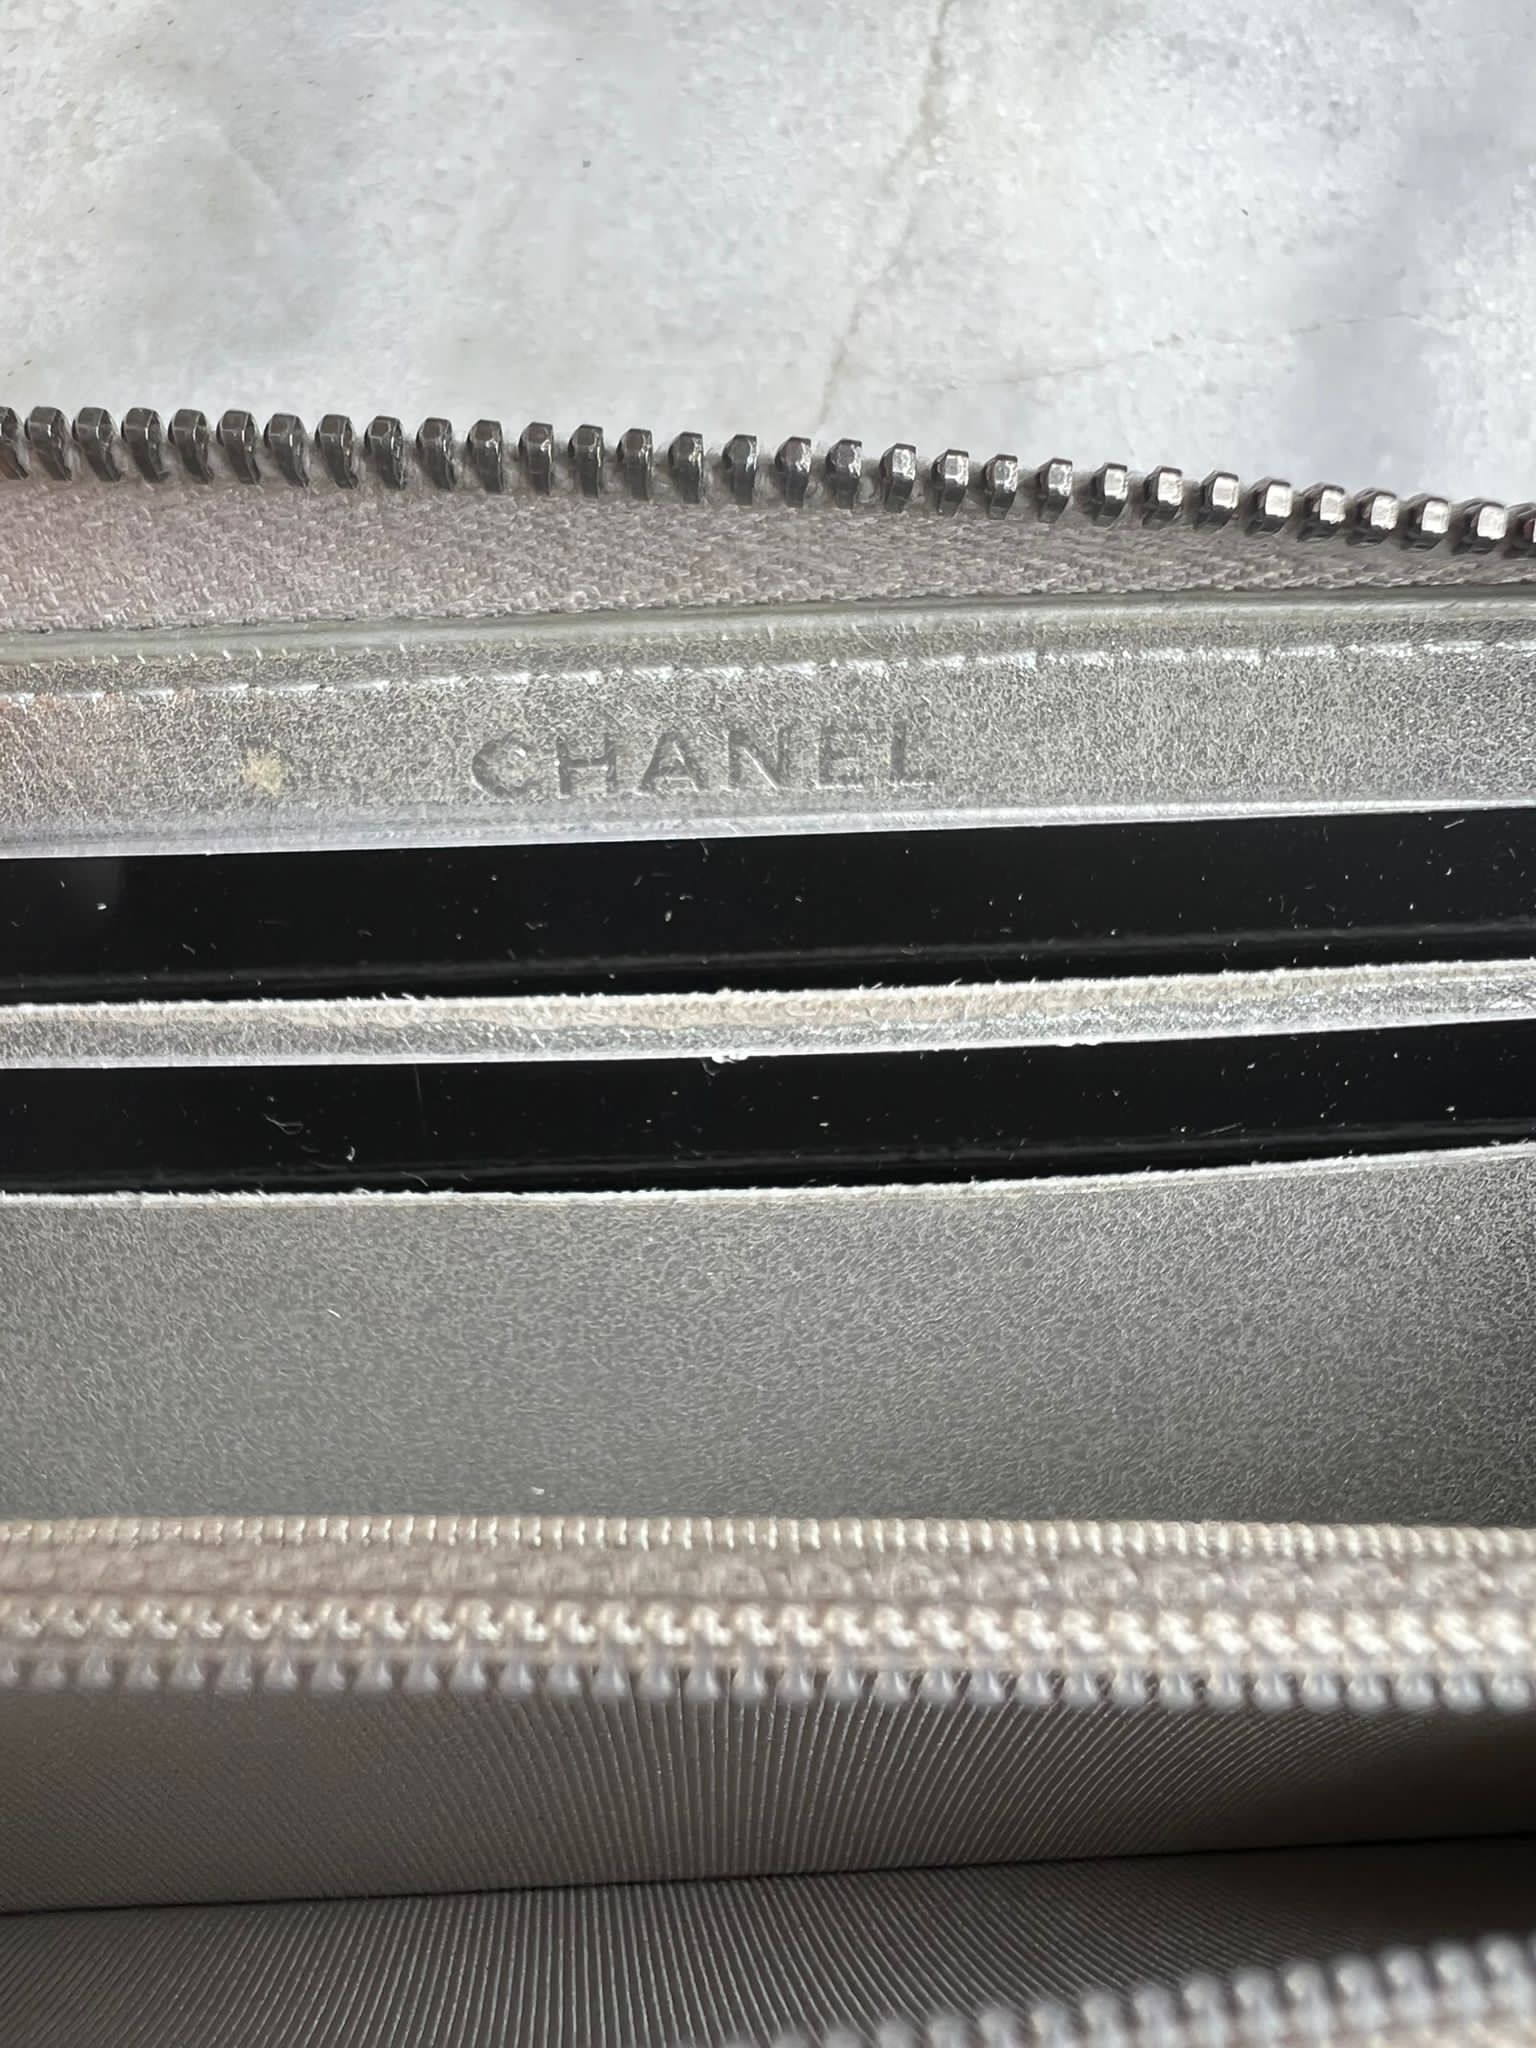 Chanel Lambskin Chevron Trendy CC Wallet On Chain WOC Bag A84456 White 2018